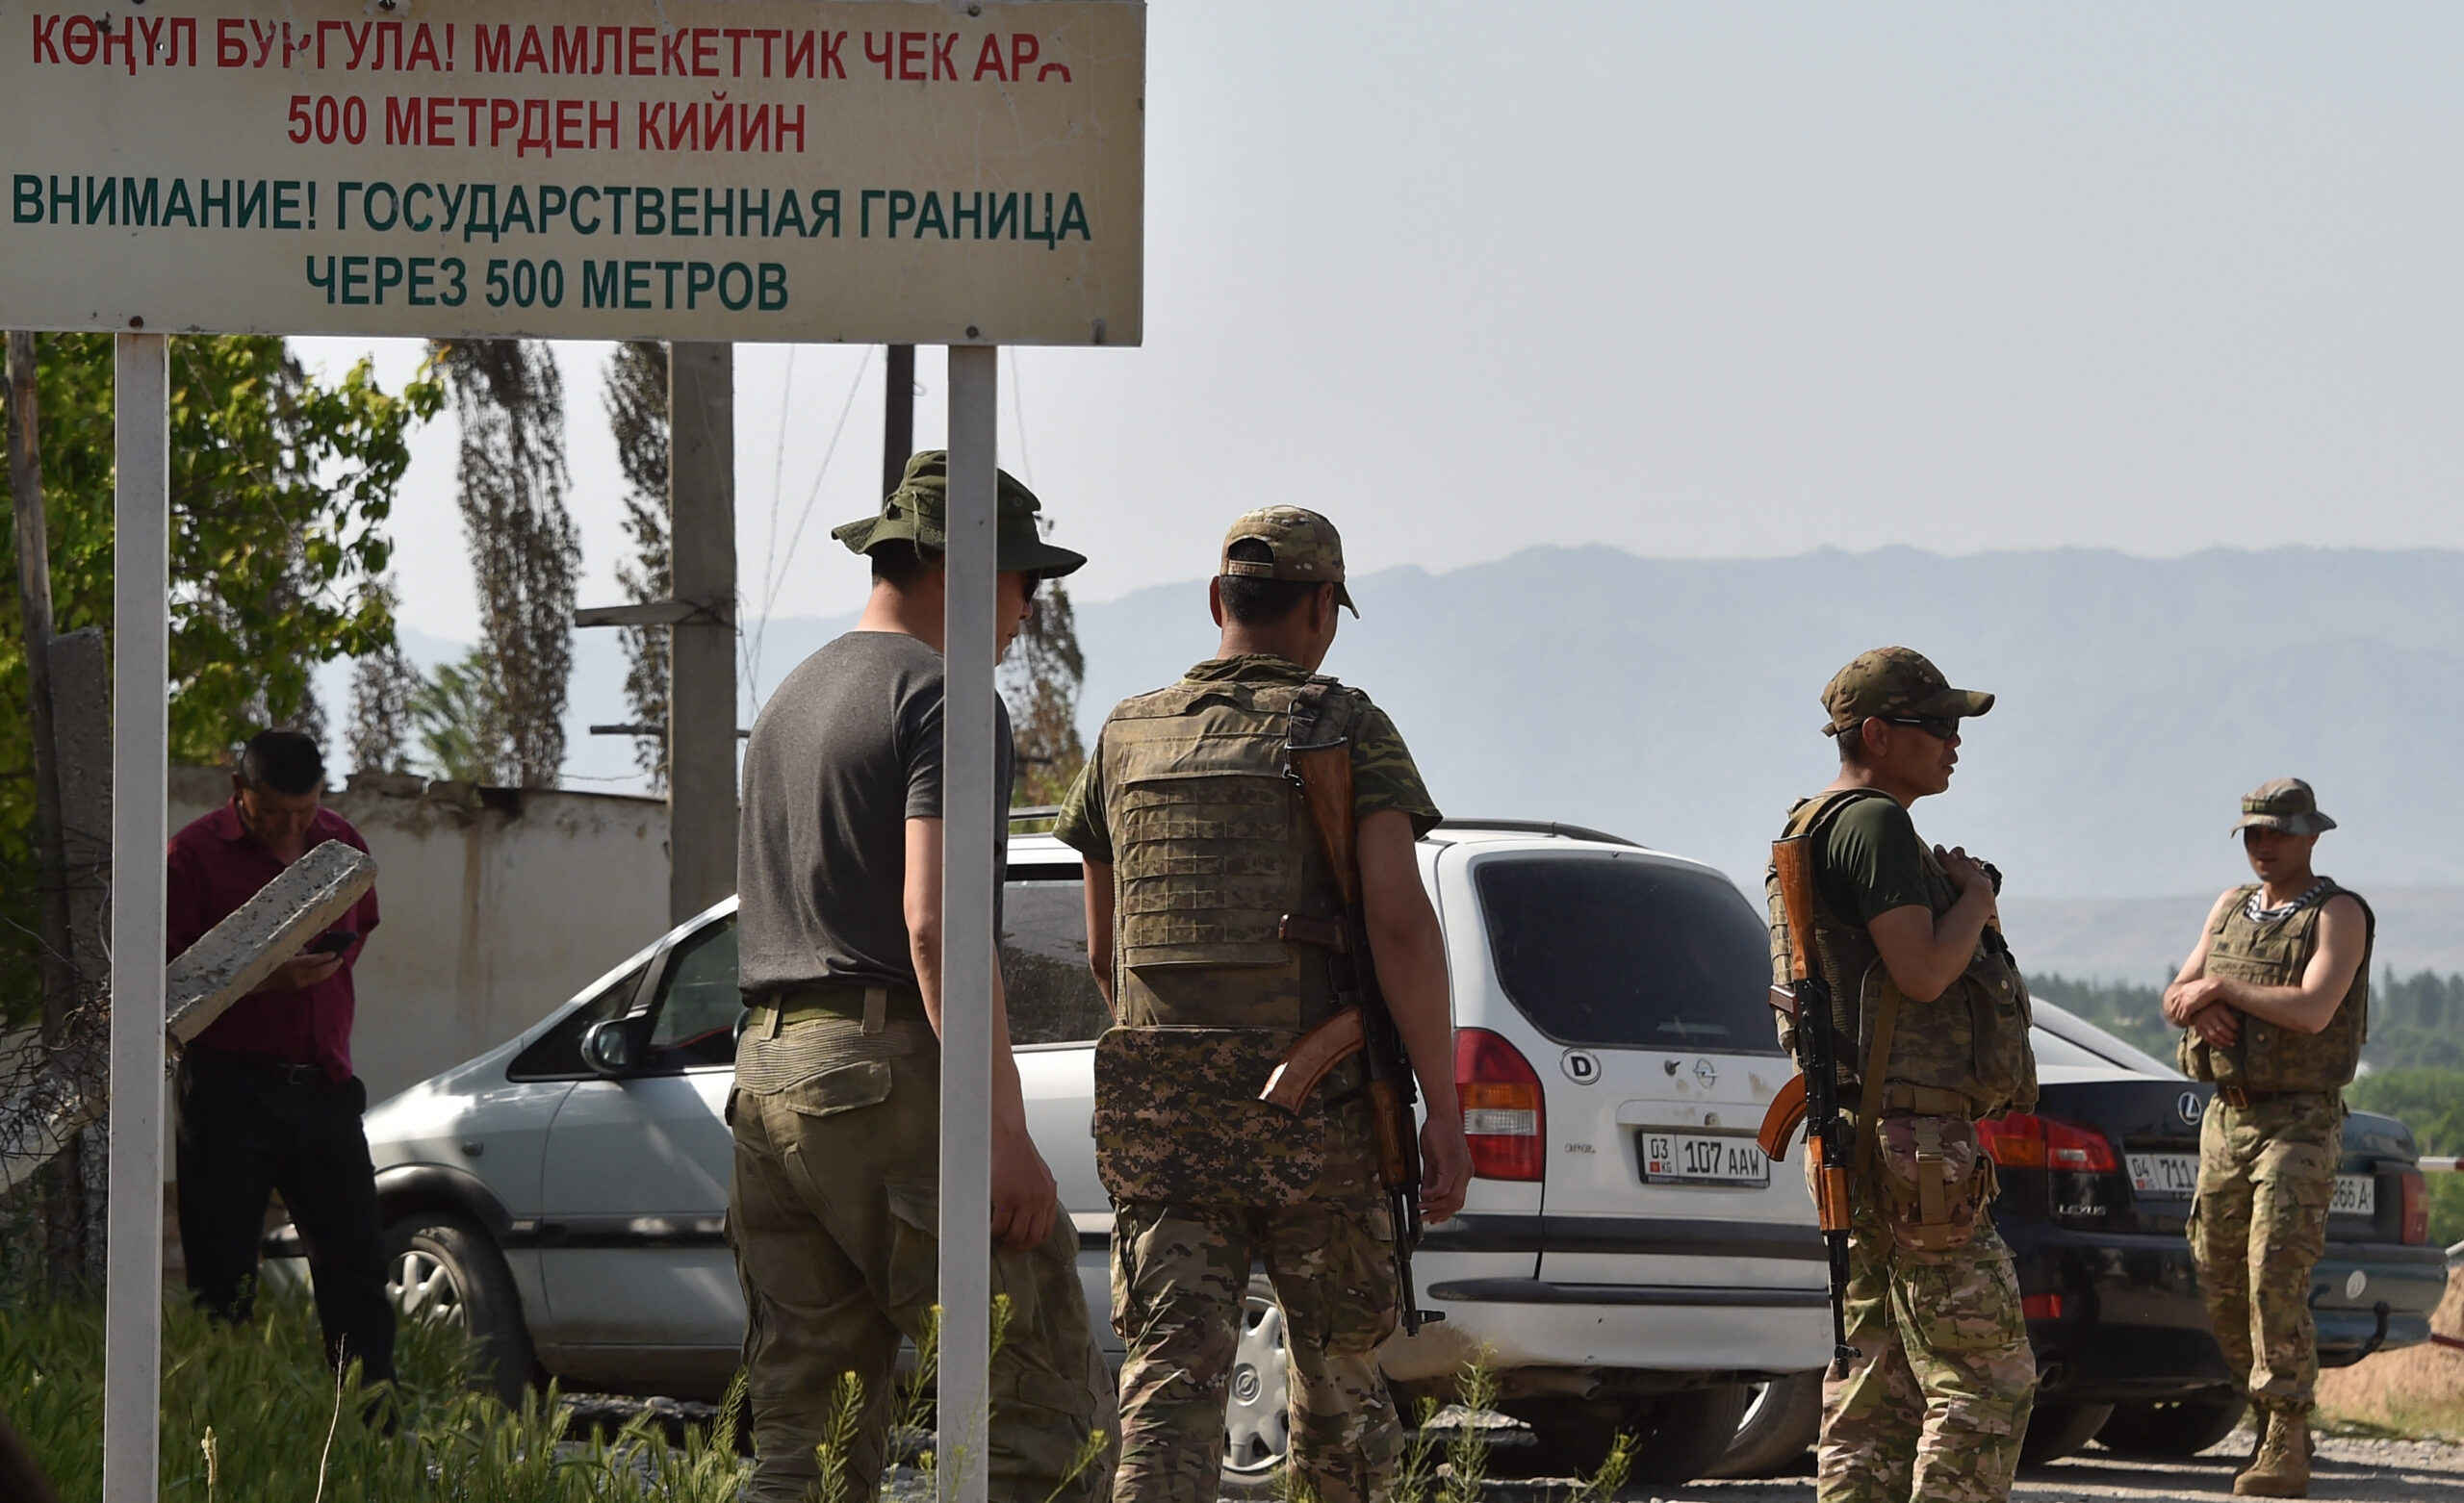 Kyrgyz border guards patrol near the Kyrgyz-Tajik border